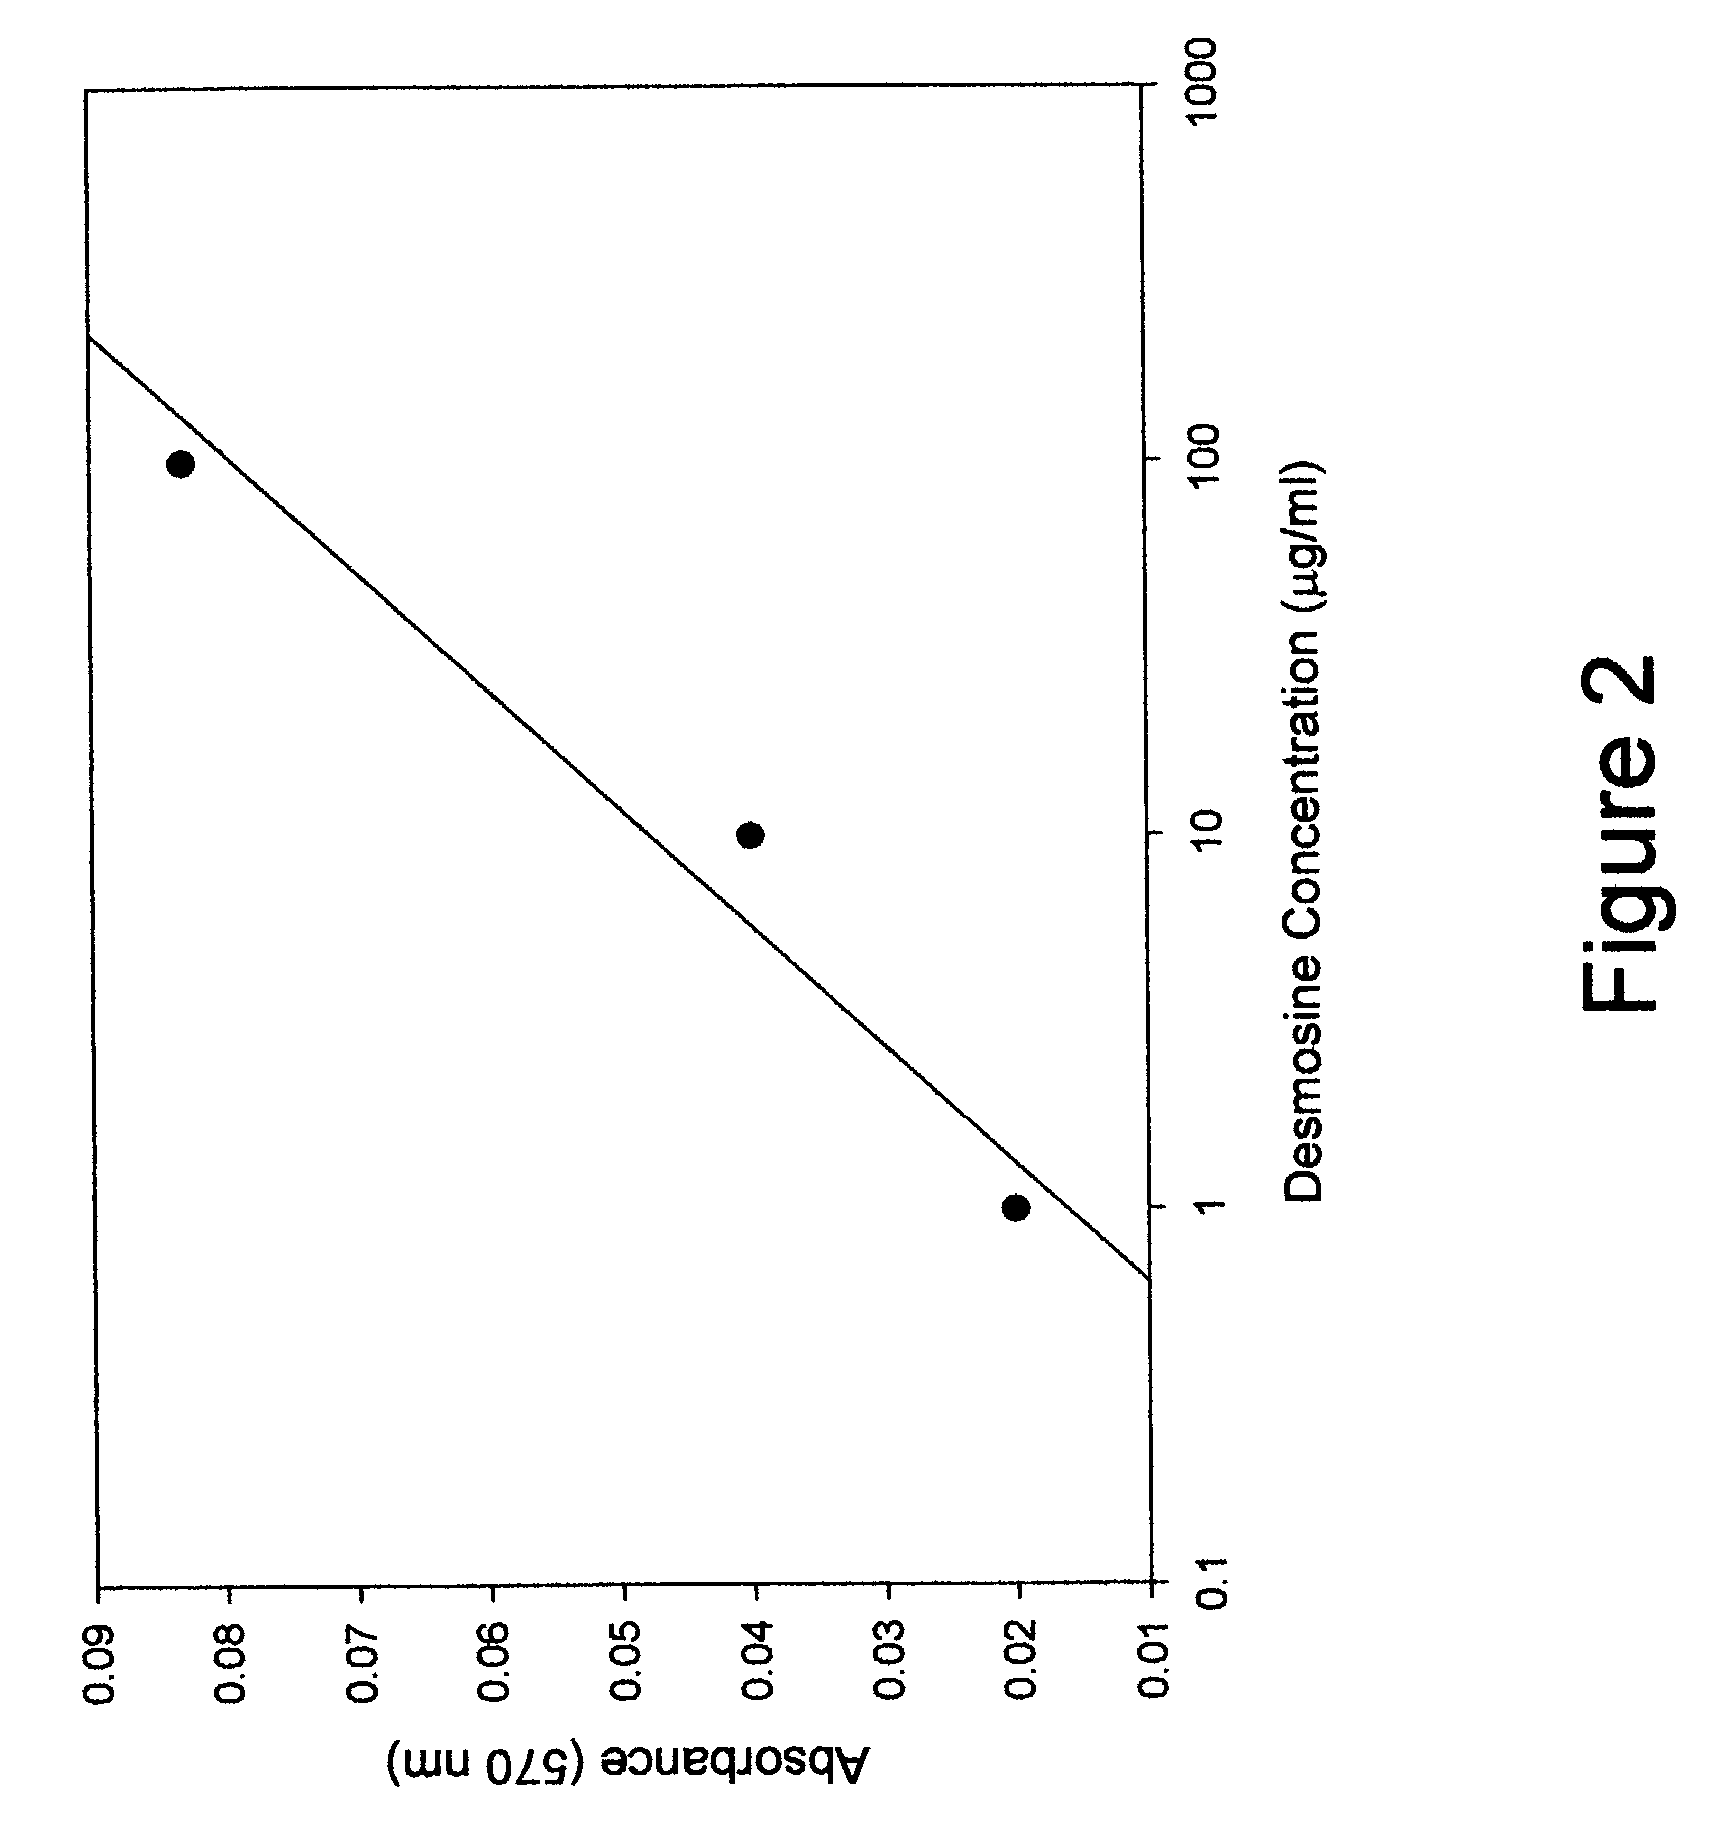 Measurement of elastic fiber breakdown products in sputum